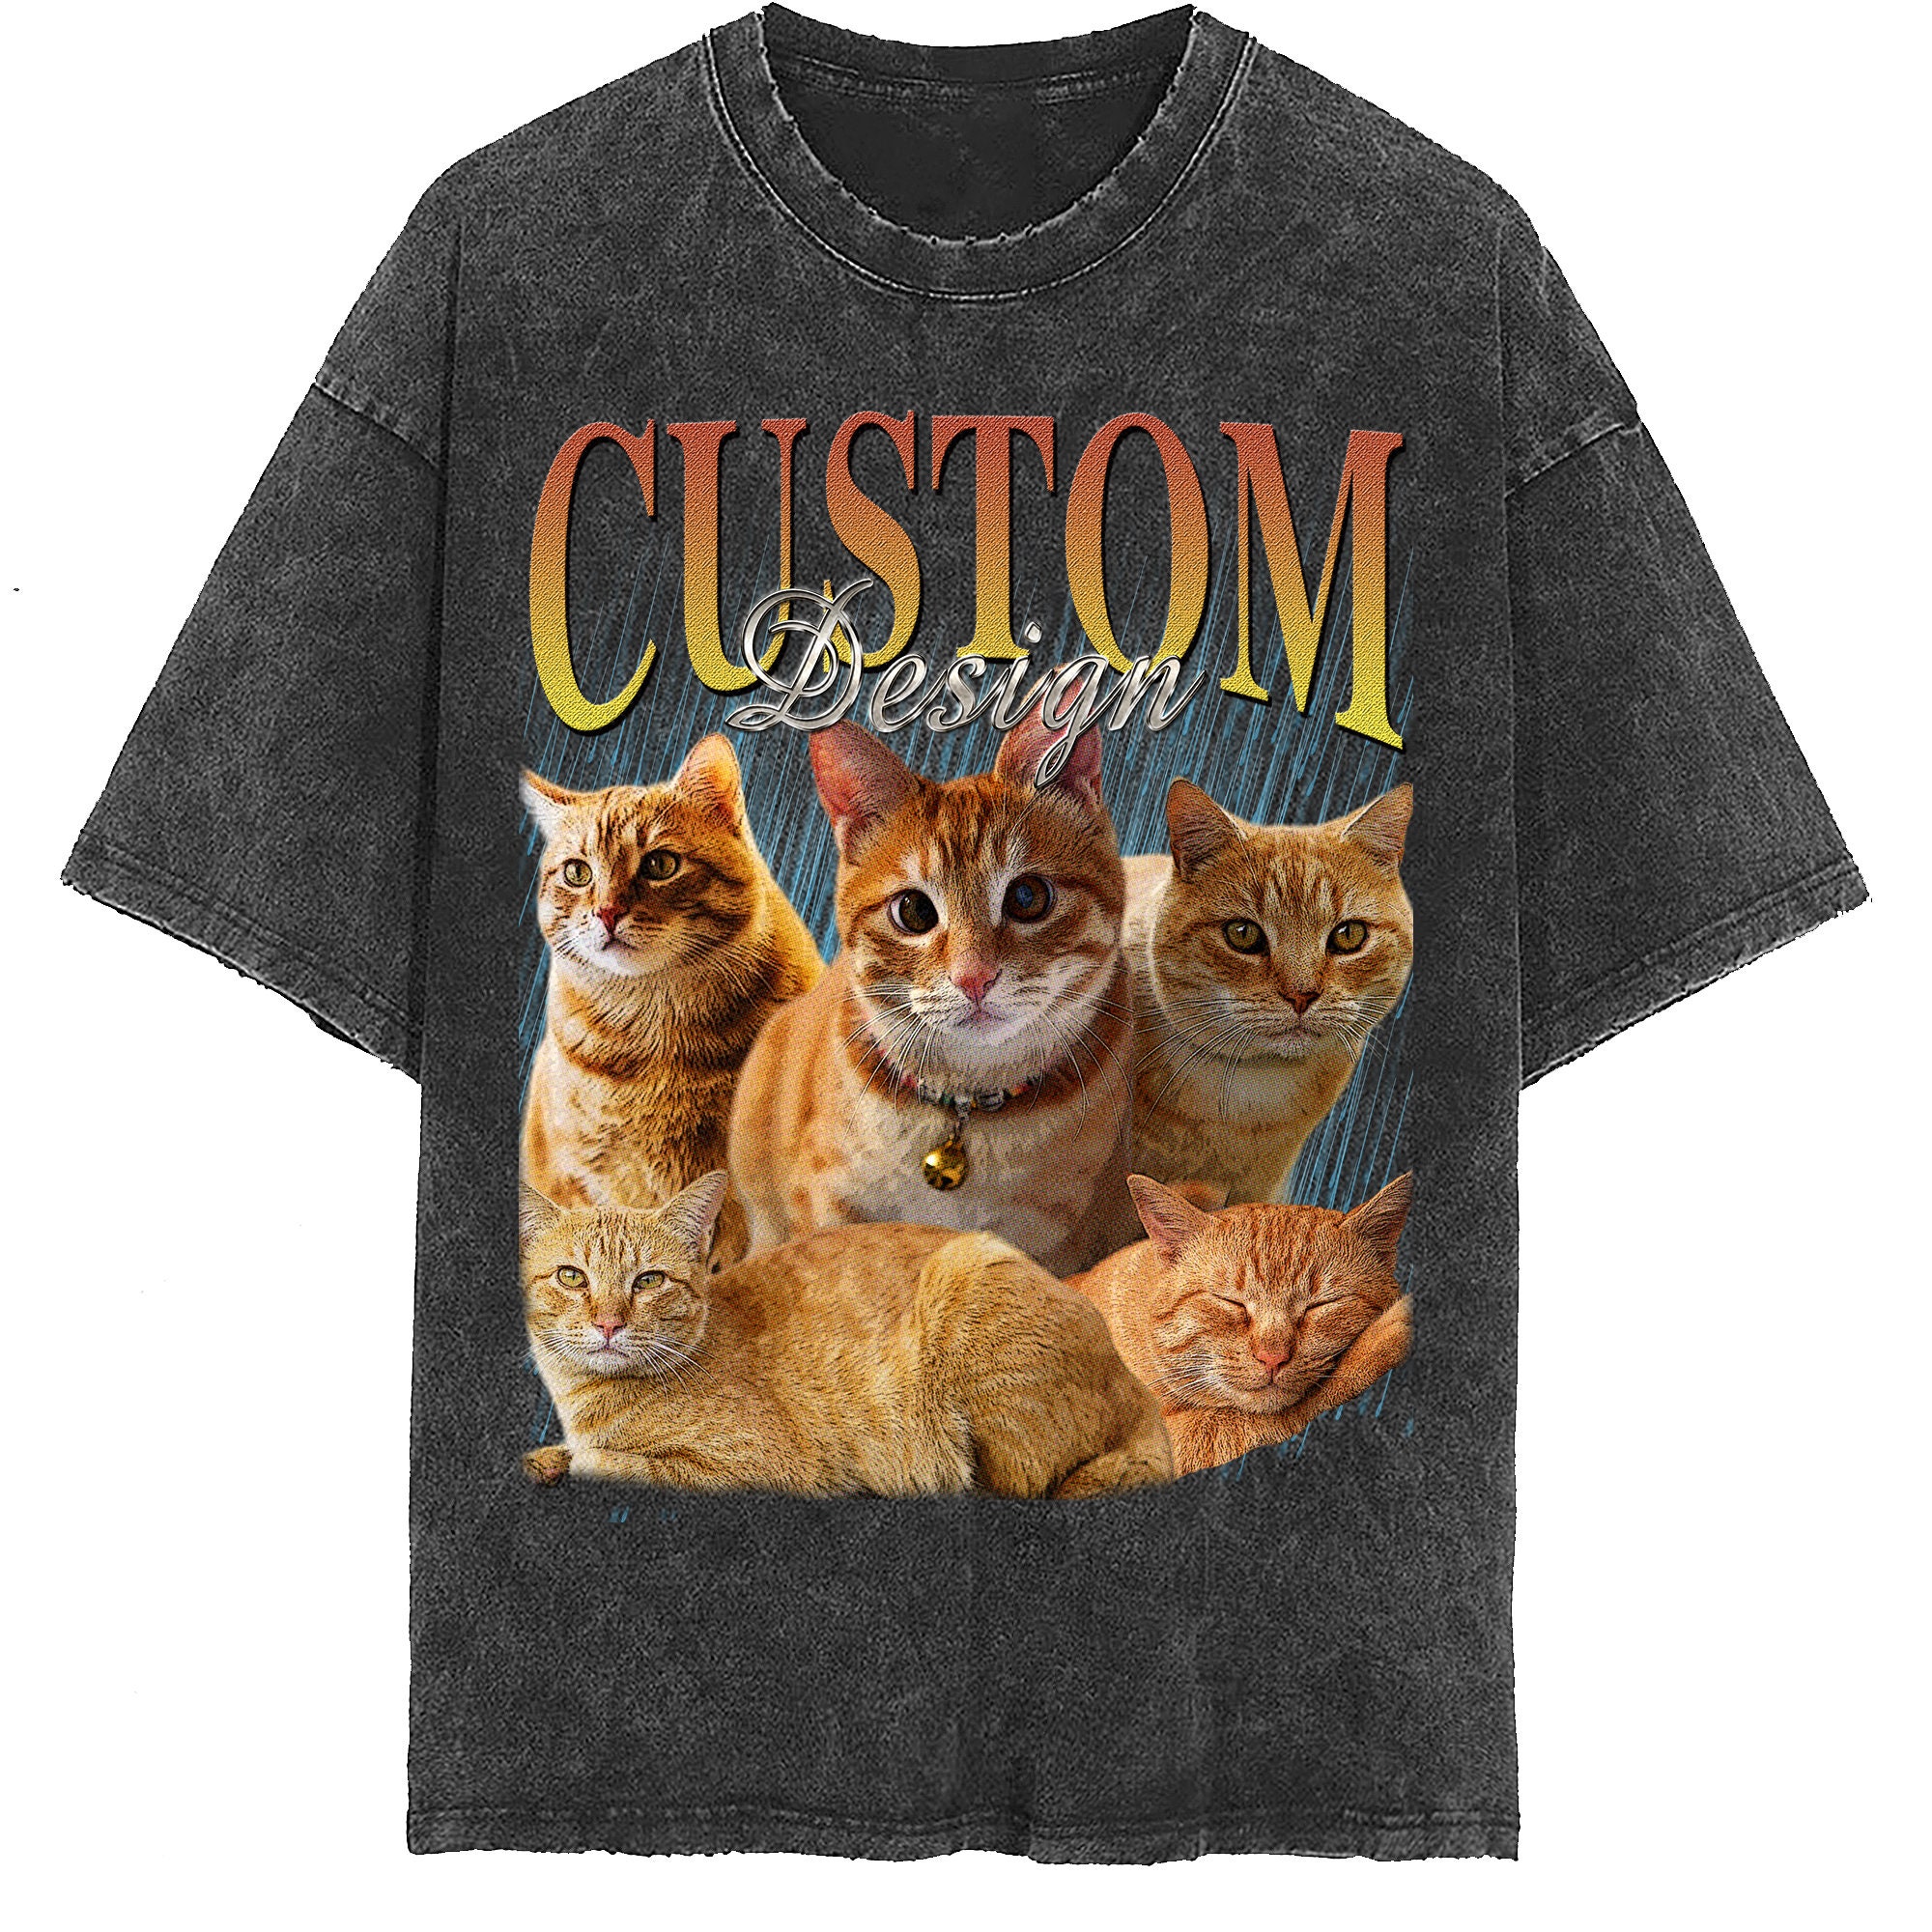 Discover Pet Custom Vintage Washed Shirt, Custom Cat Graphic Unisex T-Shirt